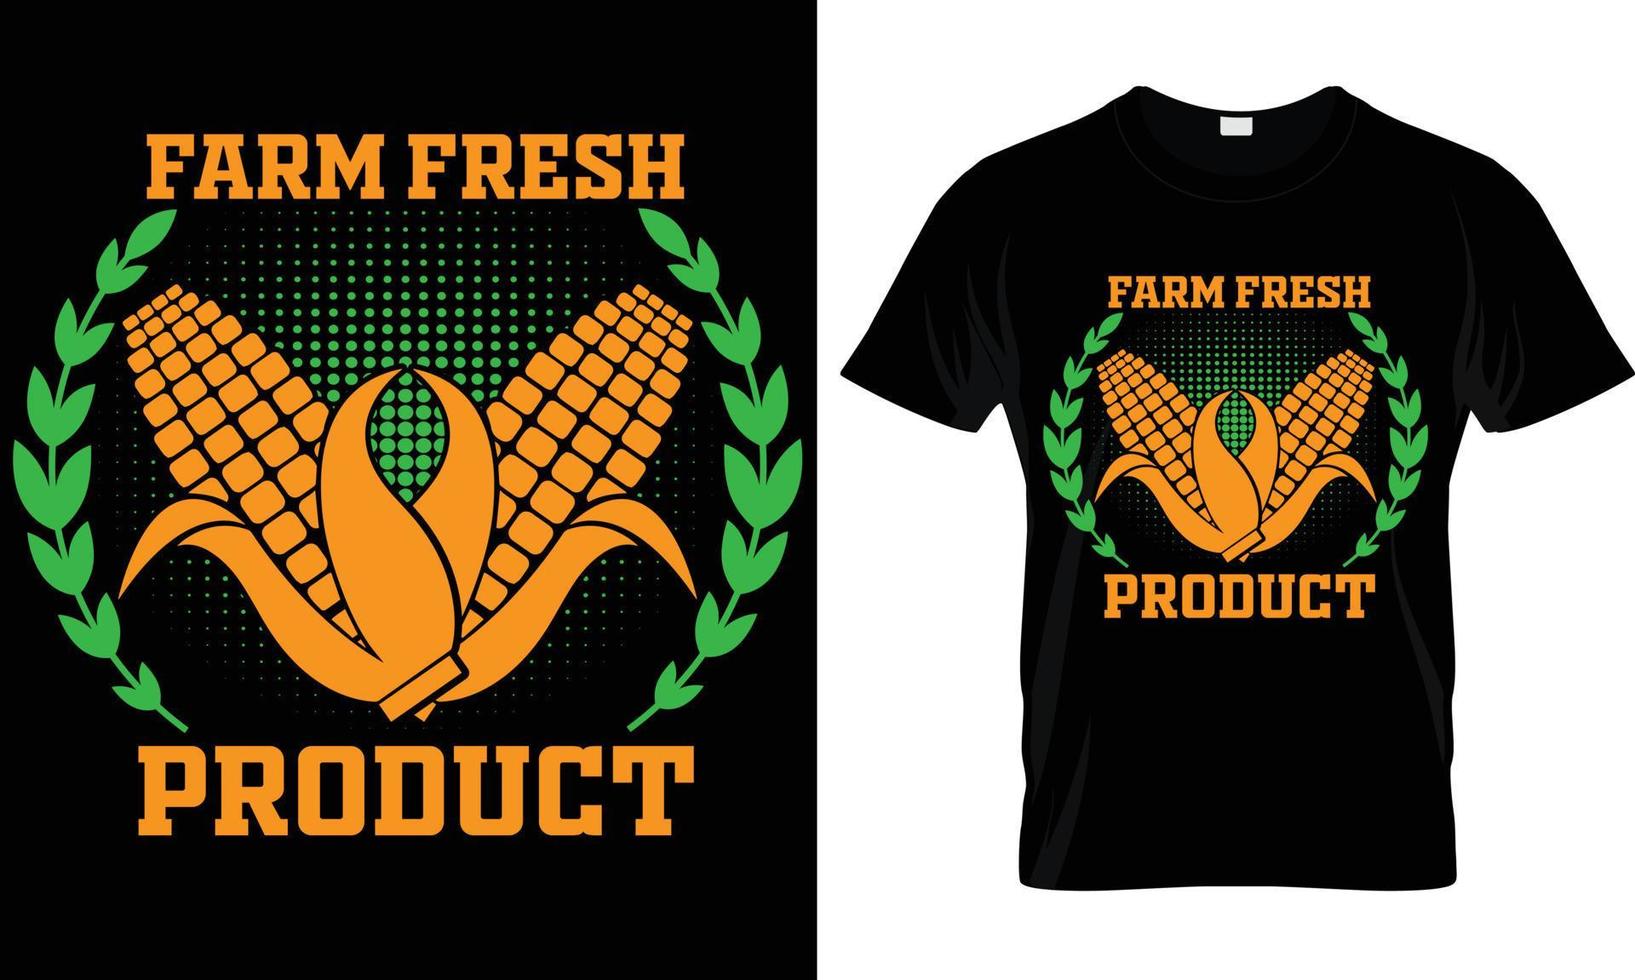 Farm fresh product t shirt design. vector